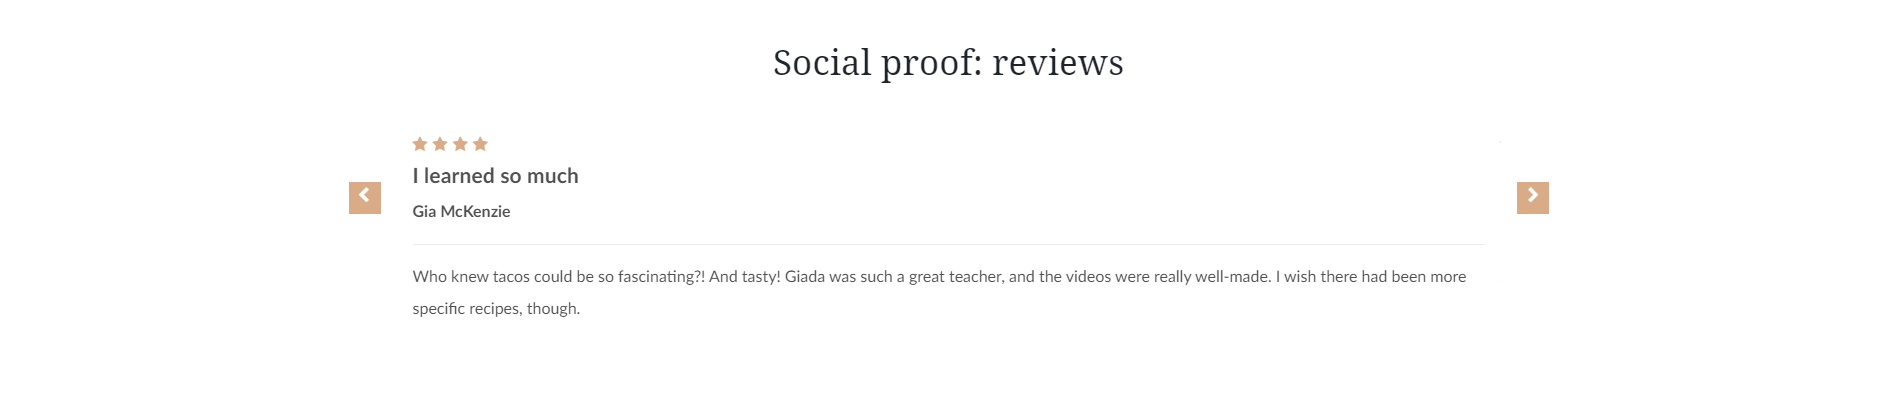 social_proof_reviews_-_vogue_classic.png